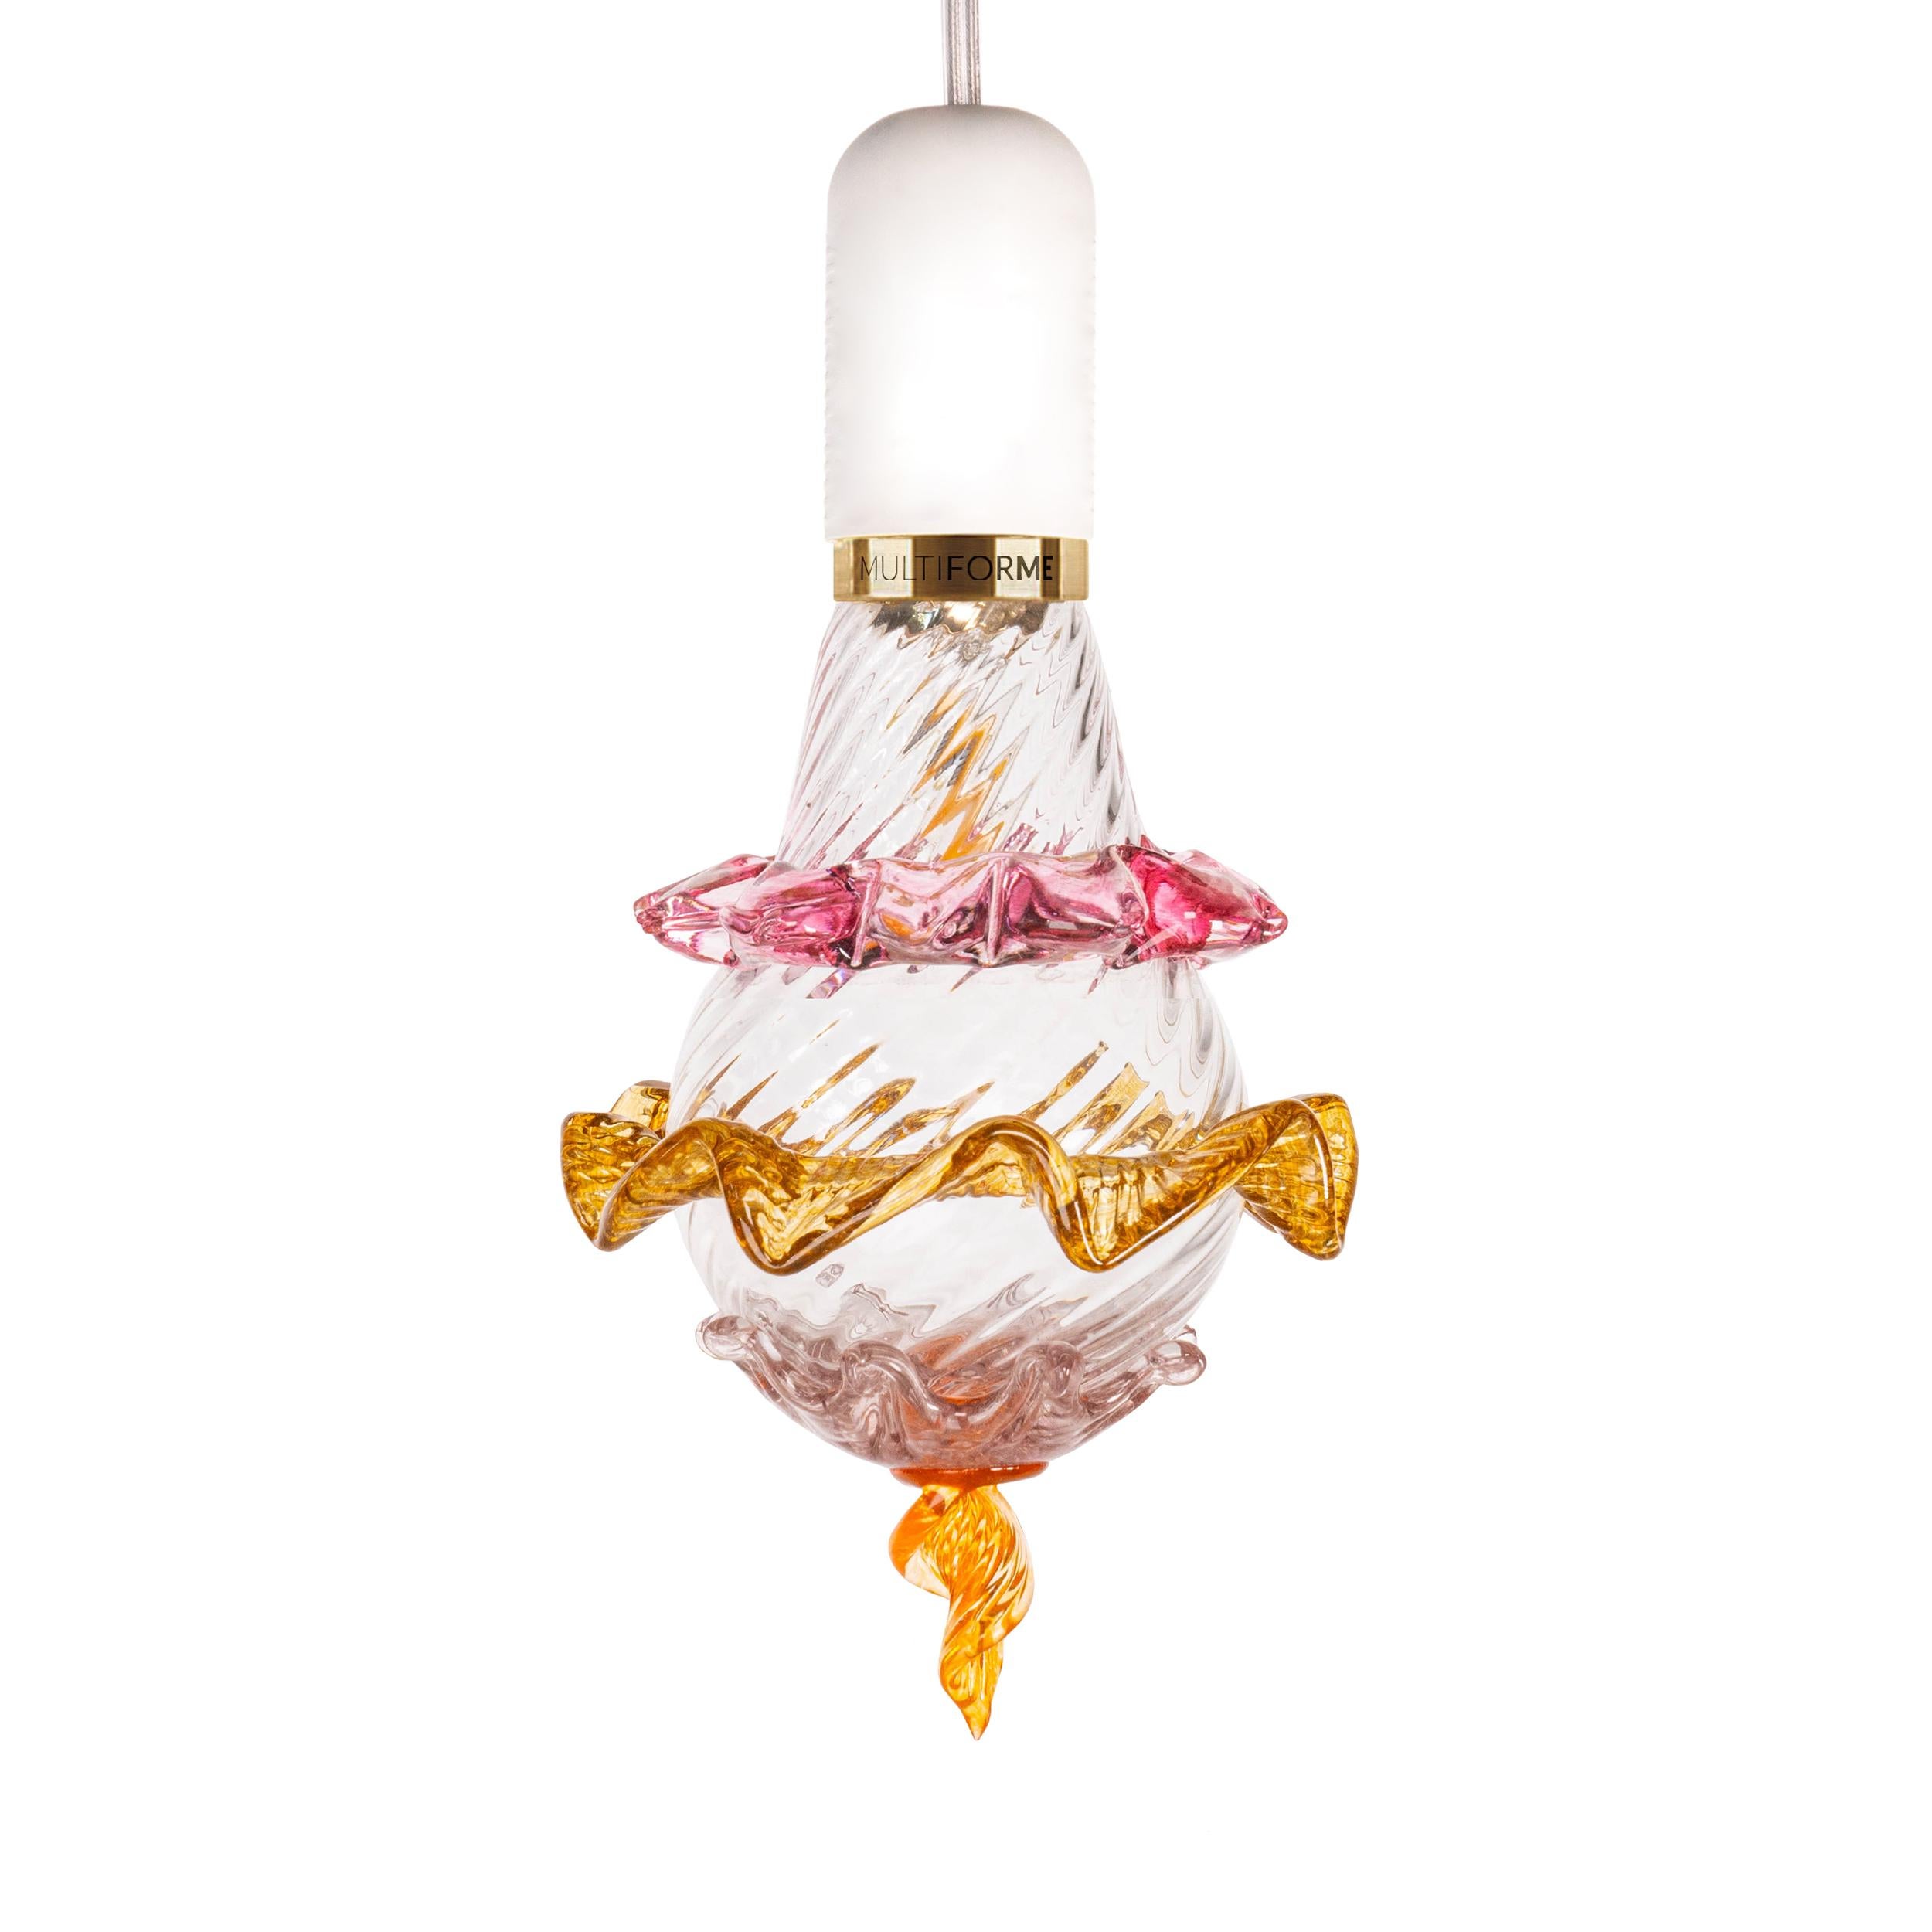 Artistic glass lightbulb chandelier Murano Bulb Marcantonio X Multiforme #09 In New Condition For Sale In Trebaseleghe, IT